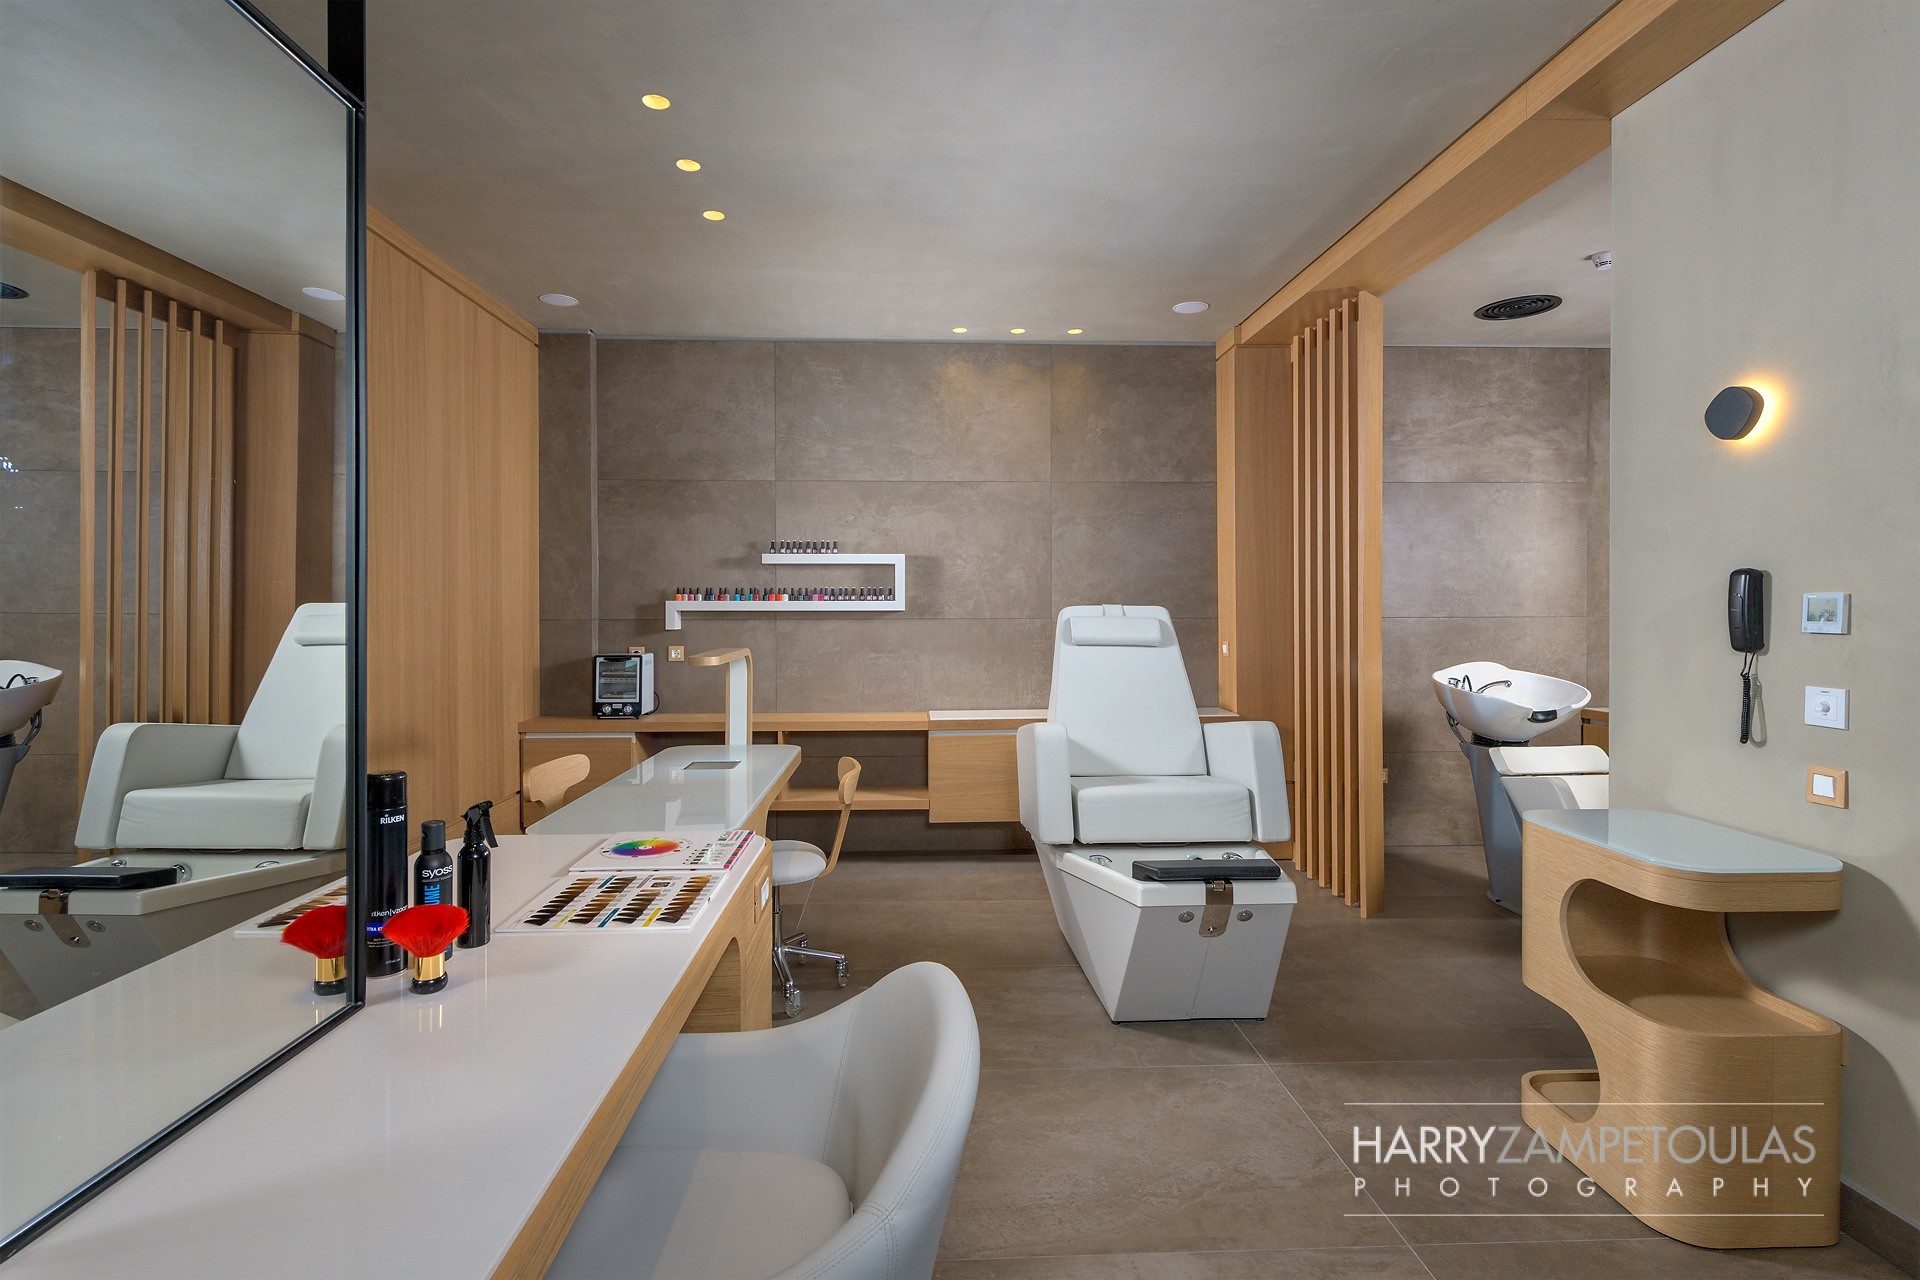 SPA-Hair-Salon Porto Angeli Resort Hotel - Hotel Photography Harry Zampetoulas 